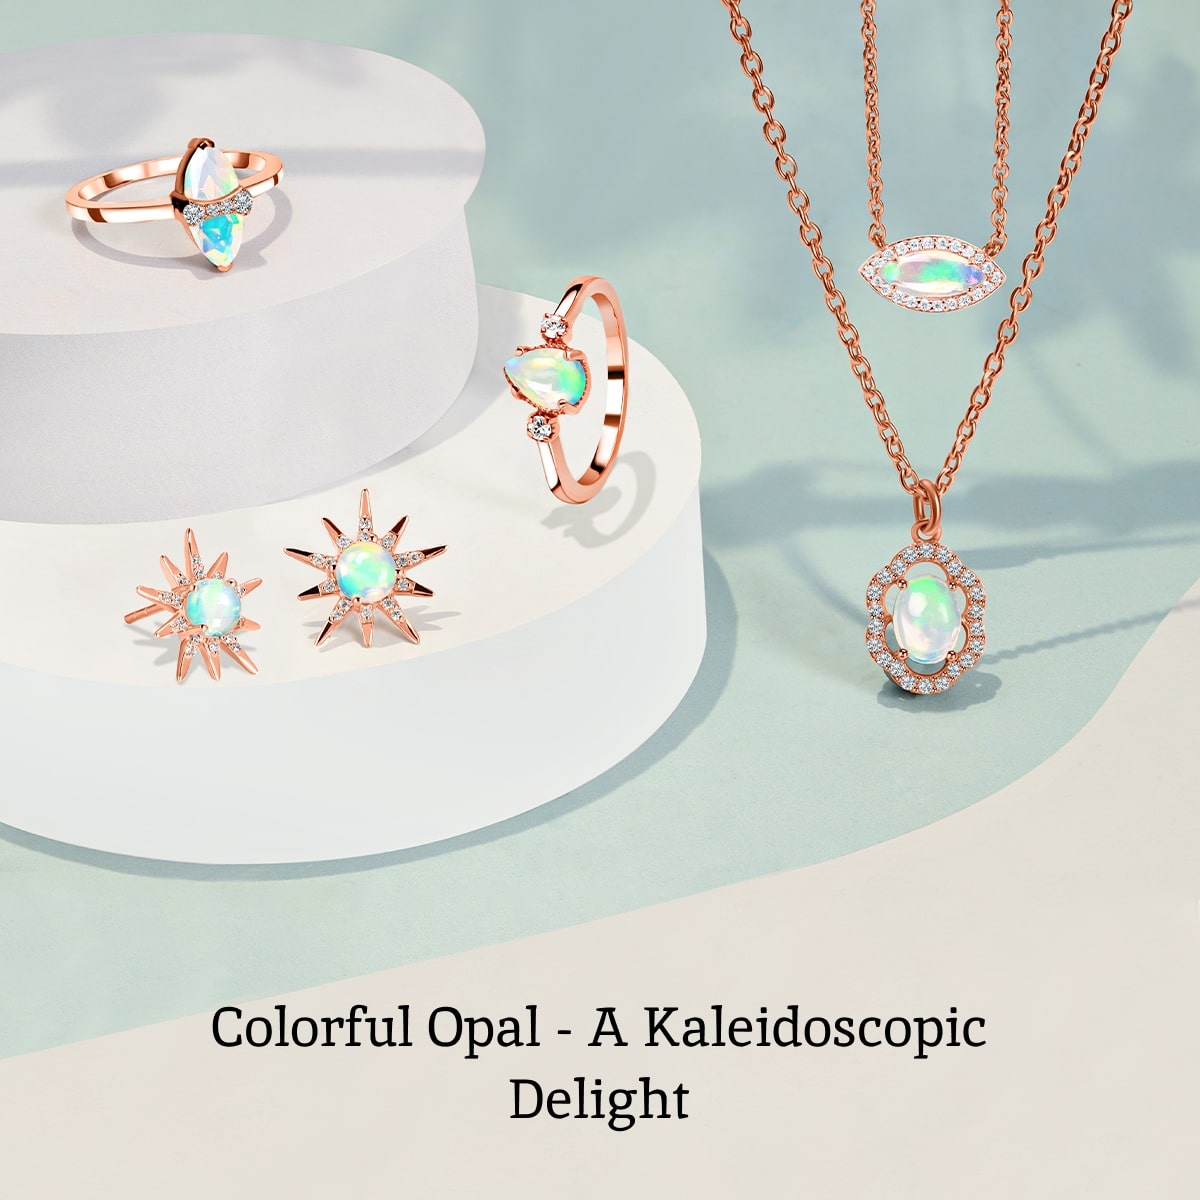 Opal - A Kaleidoscope of Colors